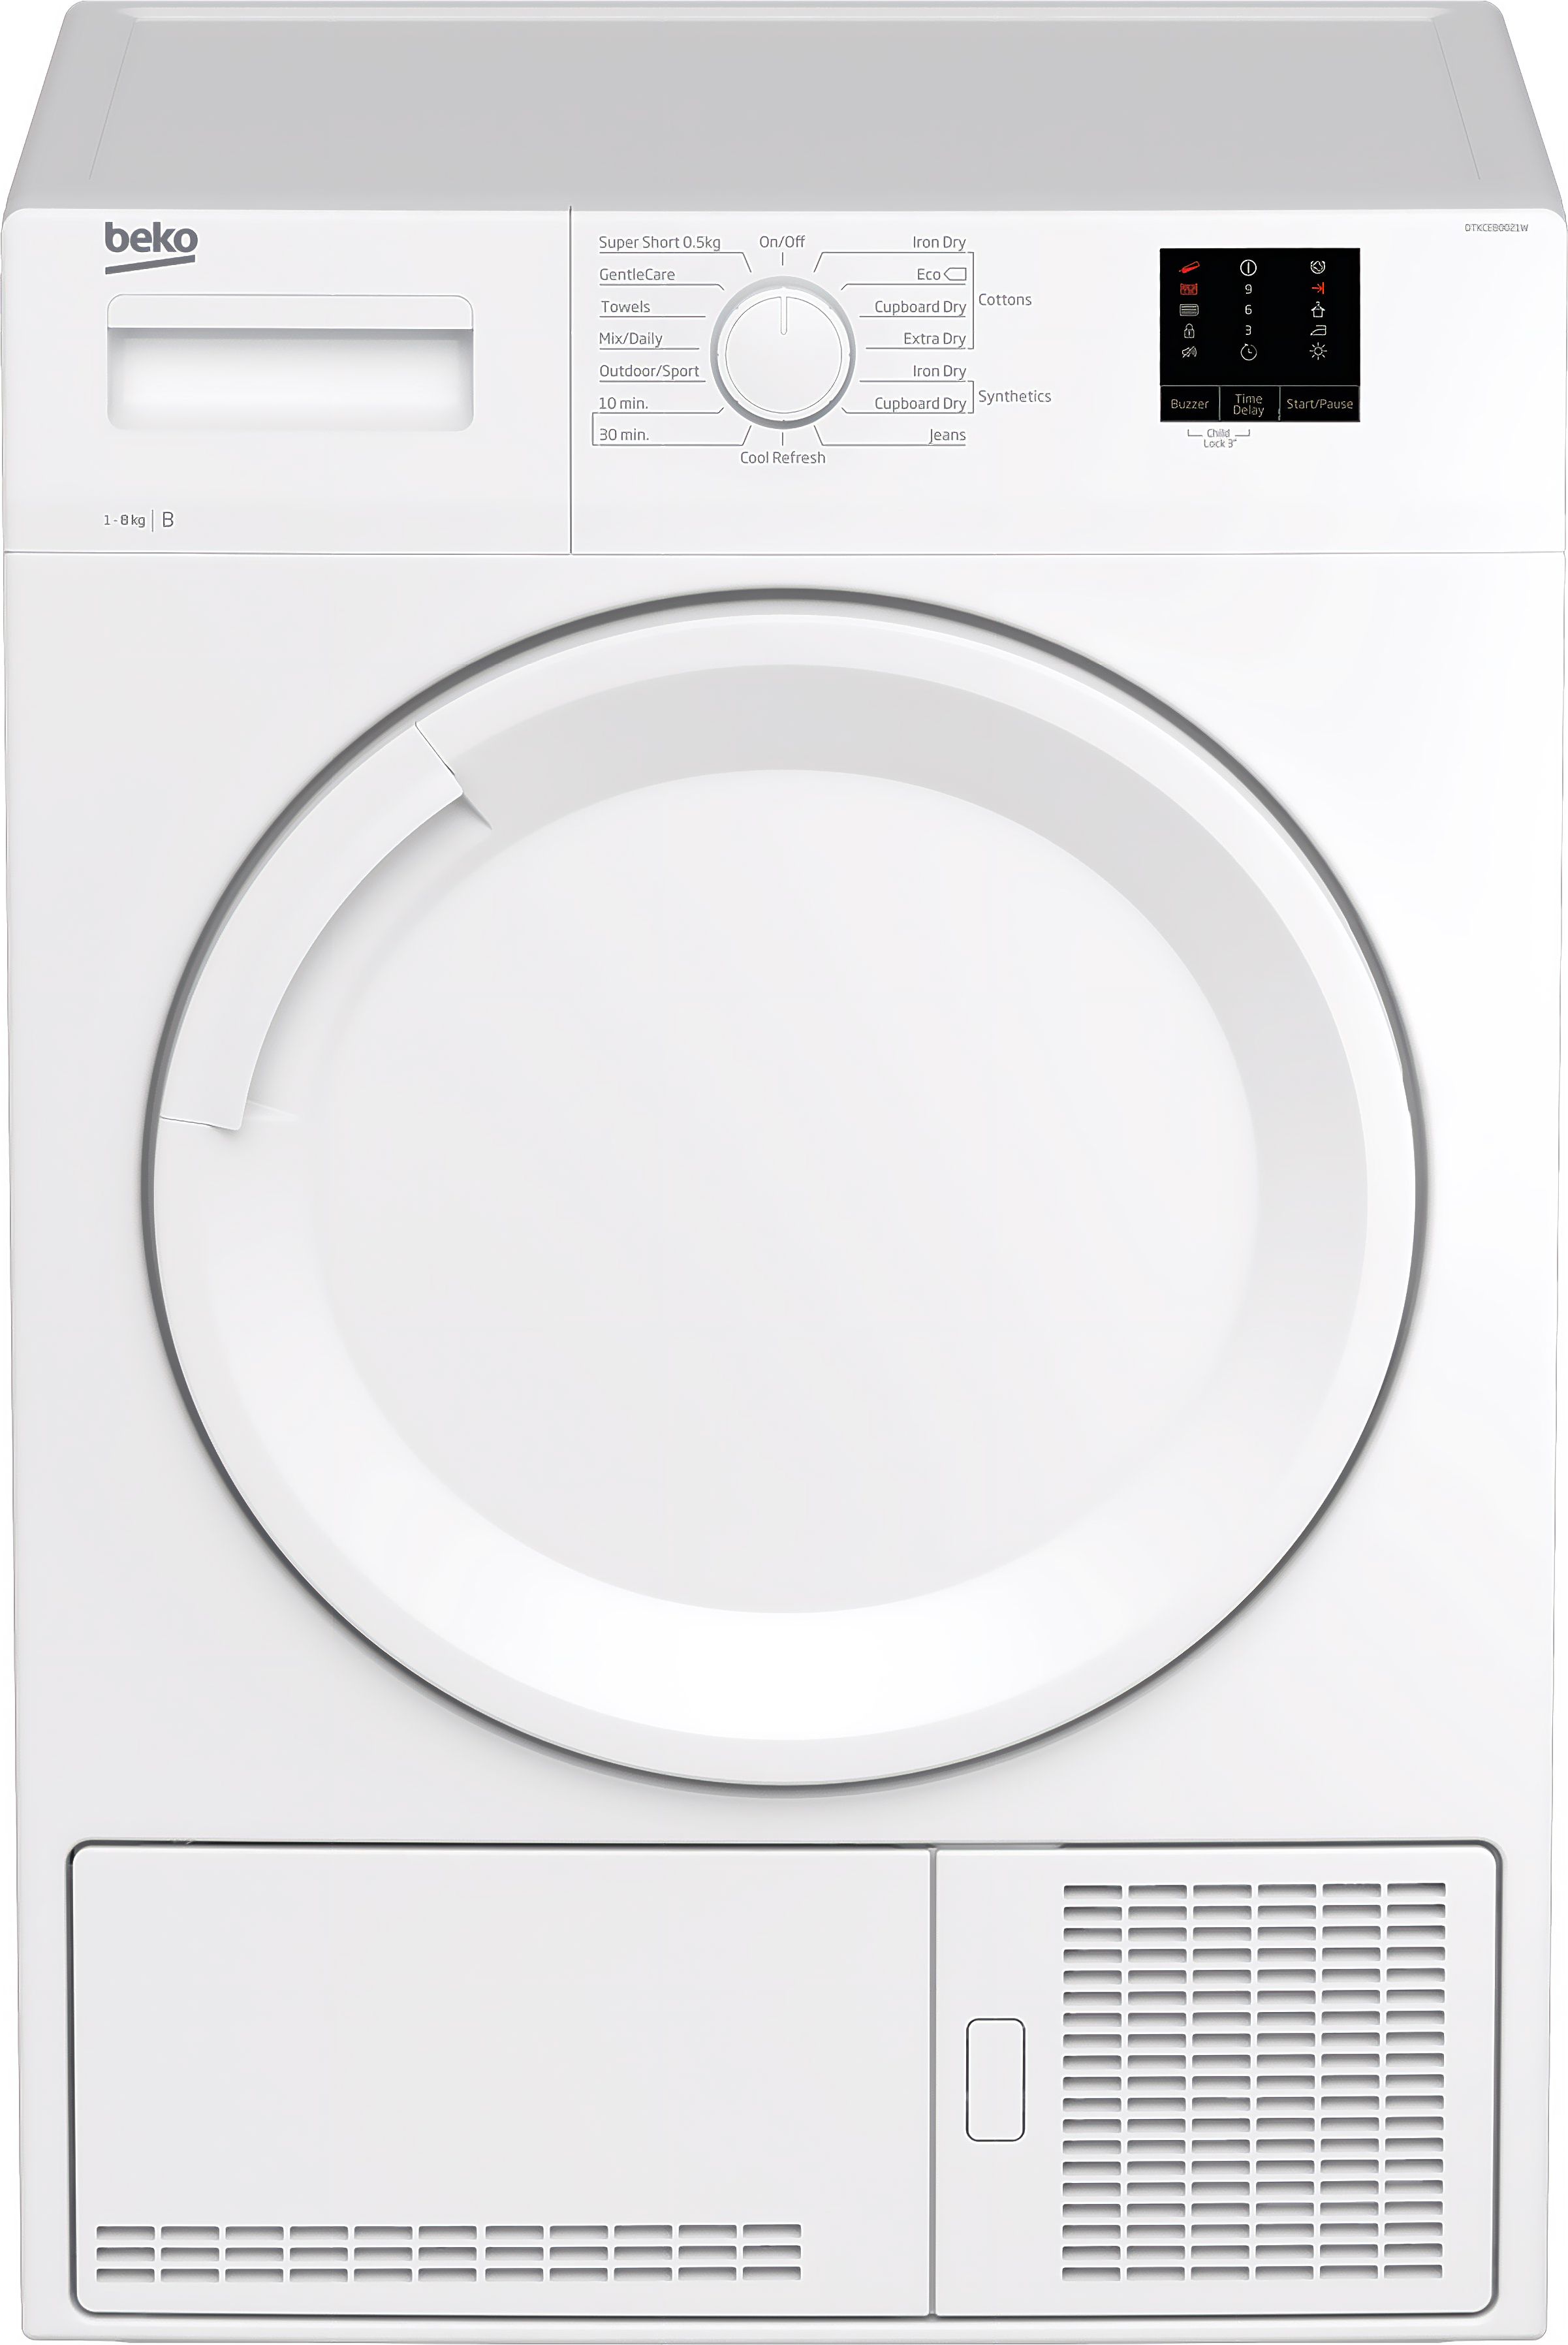 Beko DTKCE80021W 8Kg Condenser Tumble Dryer - White - B Rated, White